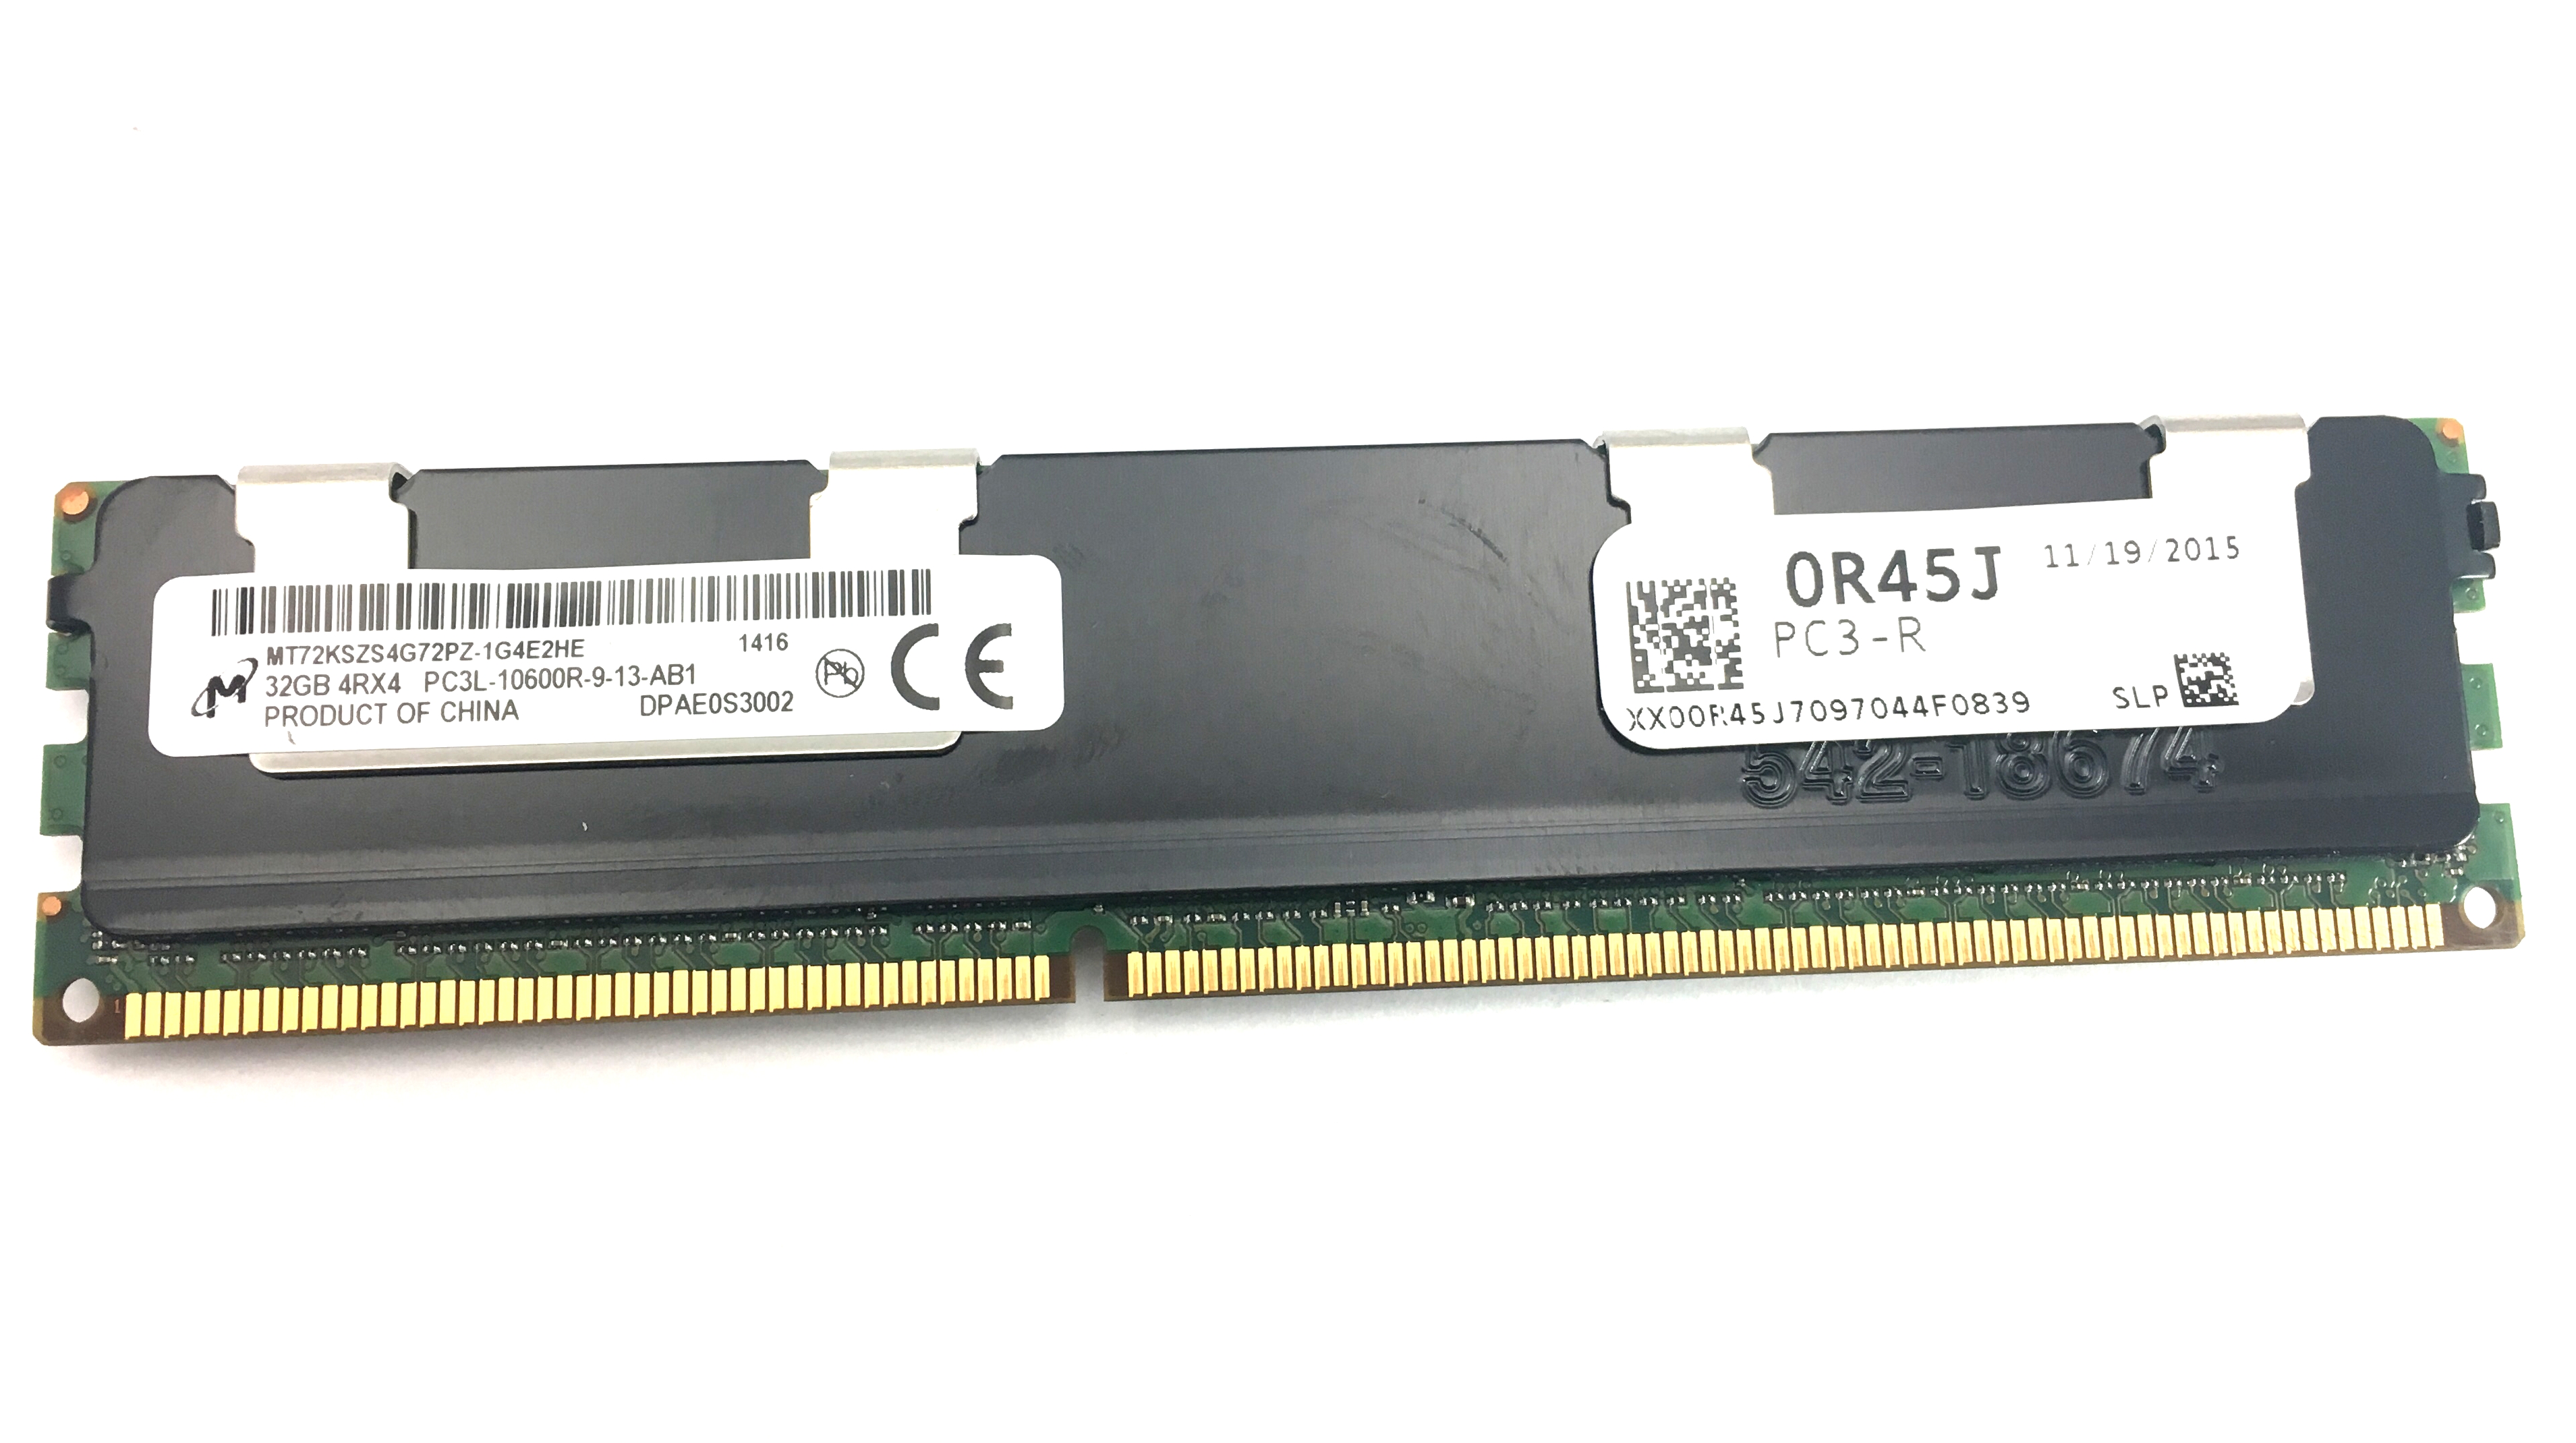 Micron 32GB 4Rx4 PC3L 10600R DDR3-1333MHz ECC Registered Memory (MT72KSZS4G72PZ-1G4E)